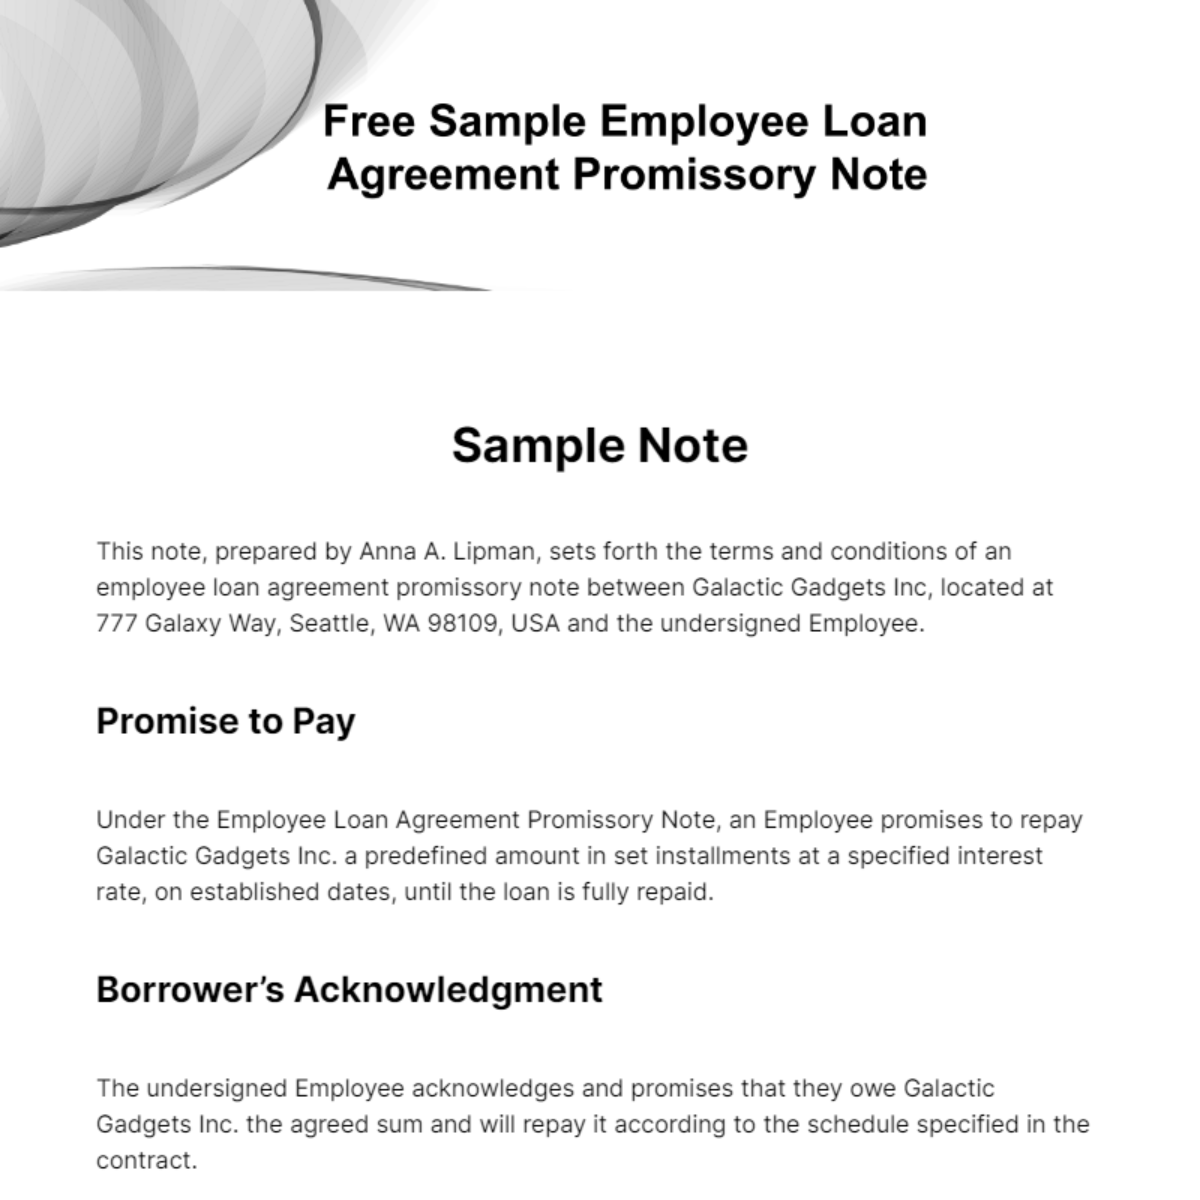 Free Sample Employee Loan Agreement Promissory Note Template